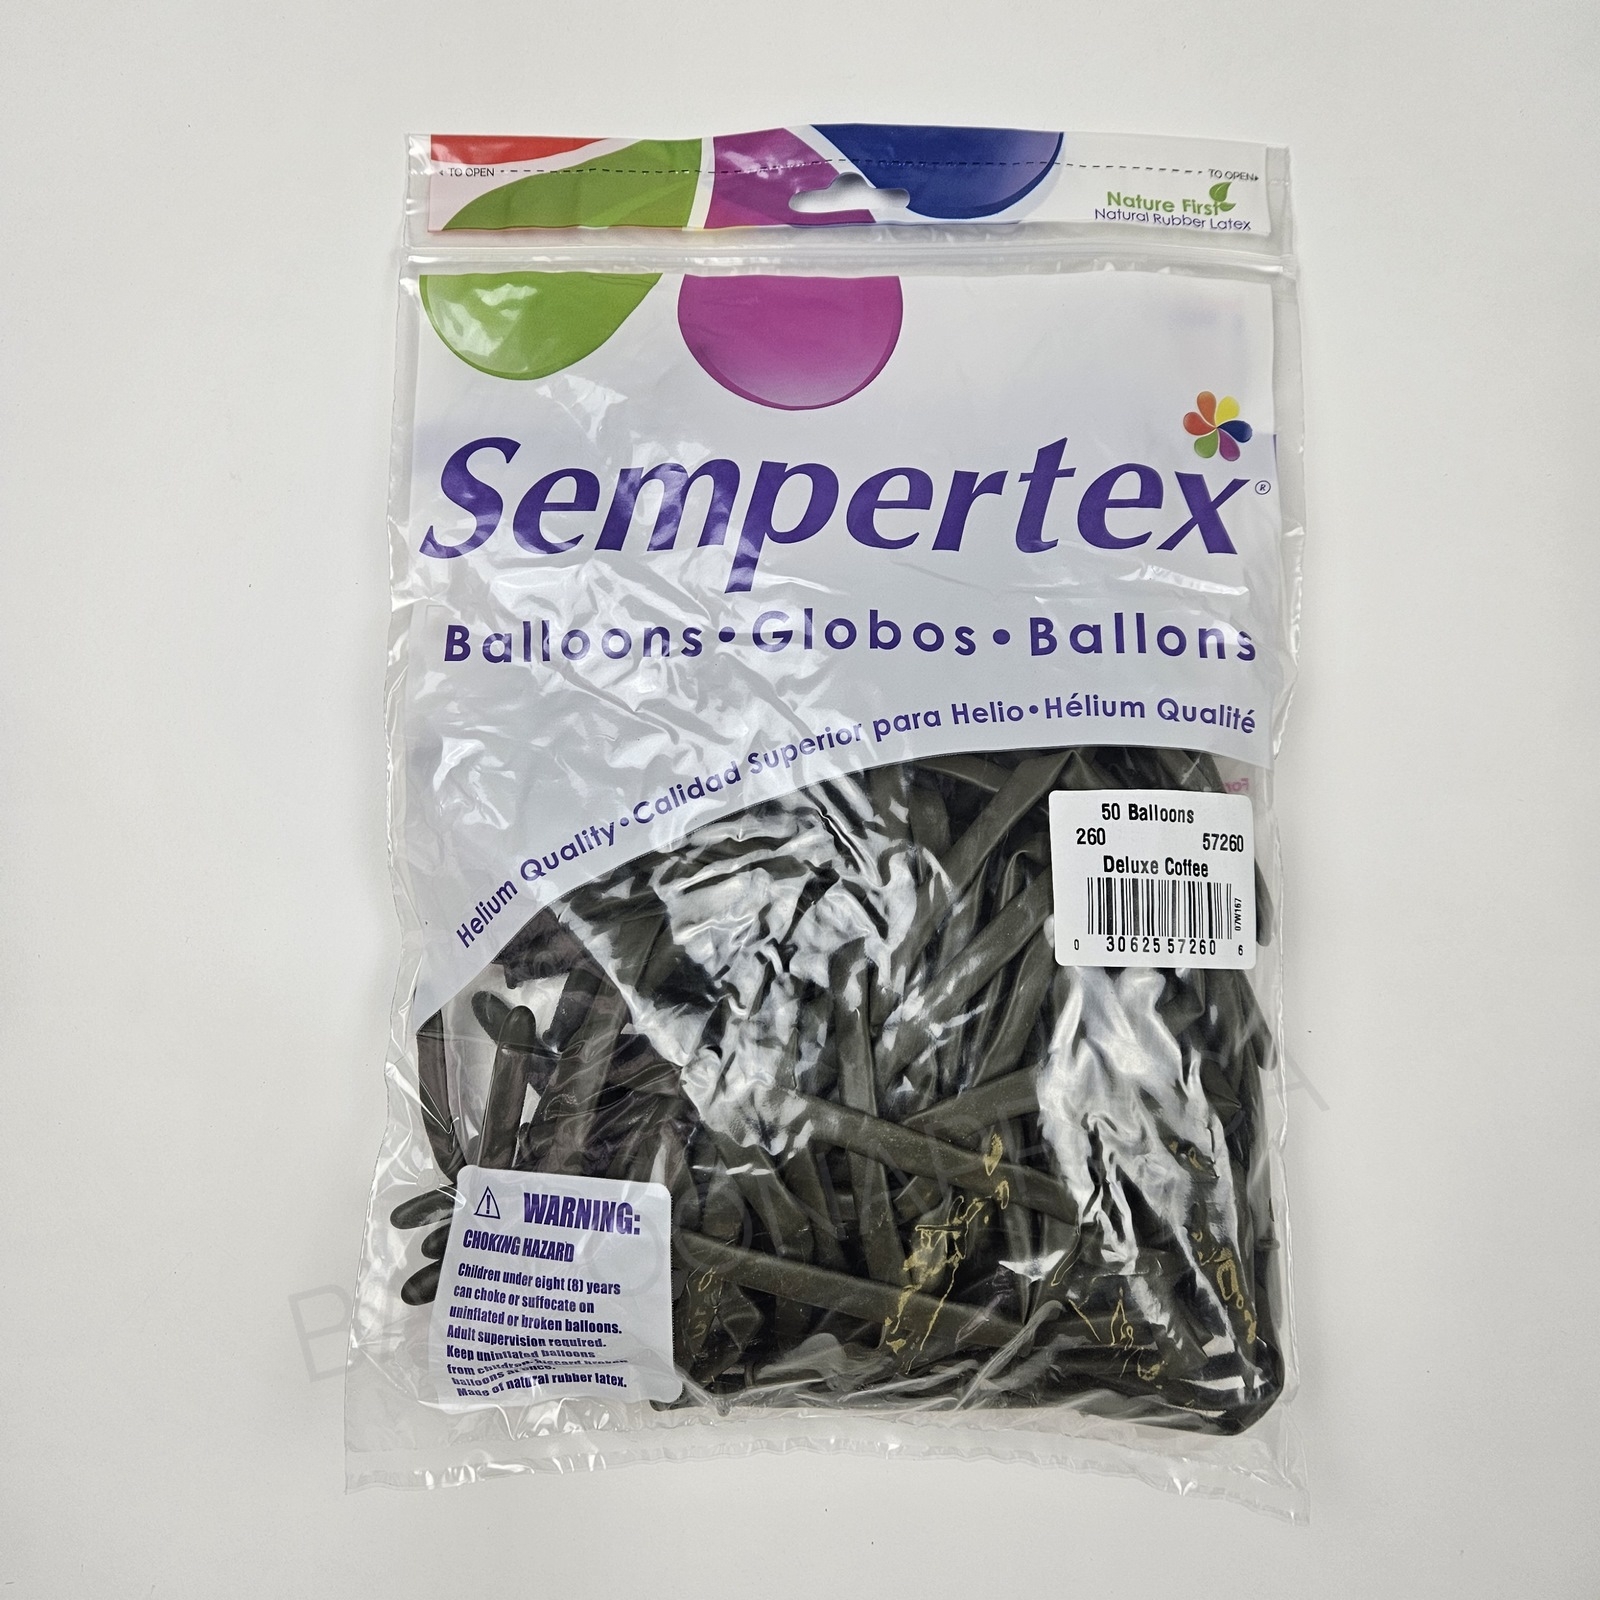 Sempertex (50) 260 Deluxe Coffee balloons